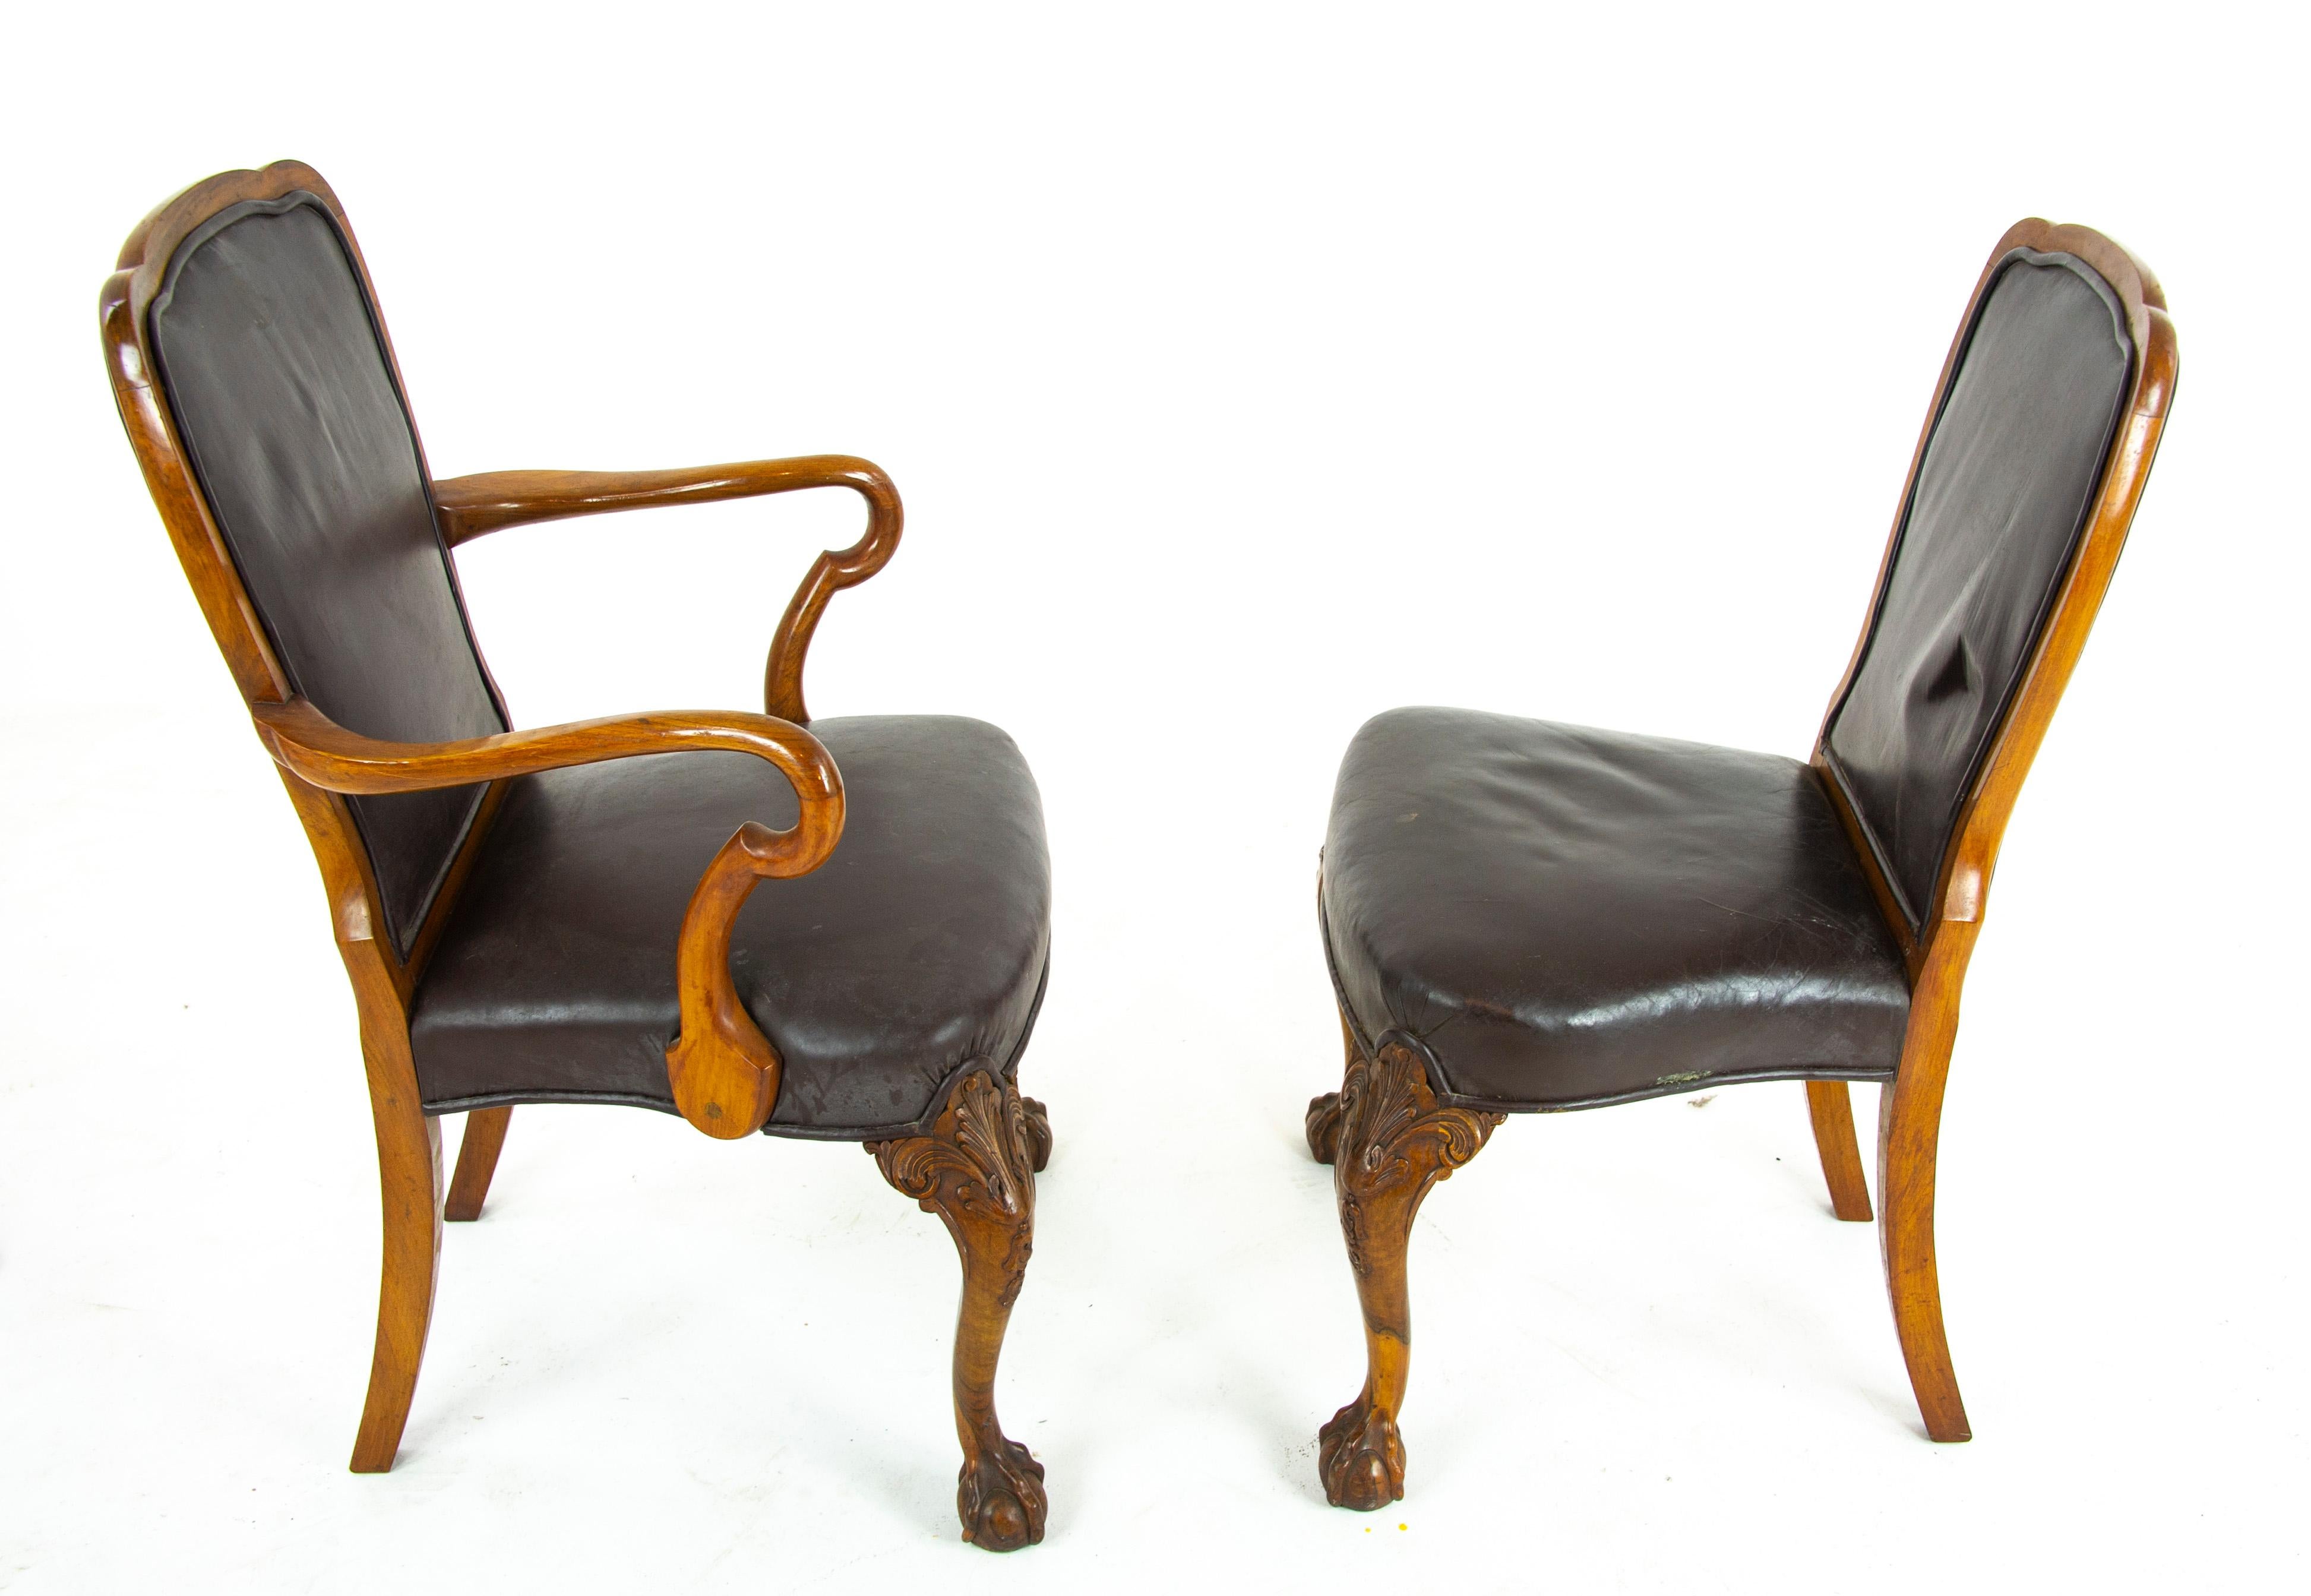 Antique Dining Chairs, Walnut, Leather Seats, Scotland 1930, B1348 2